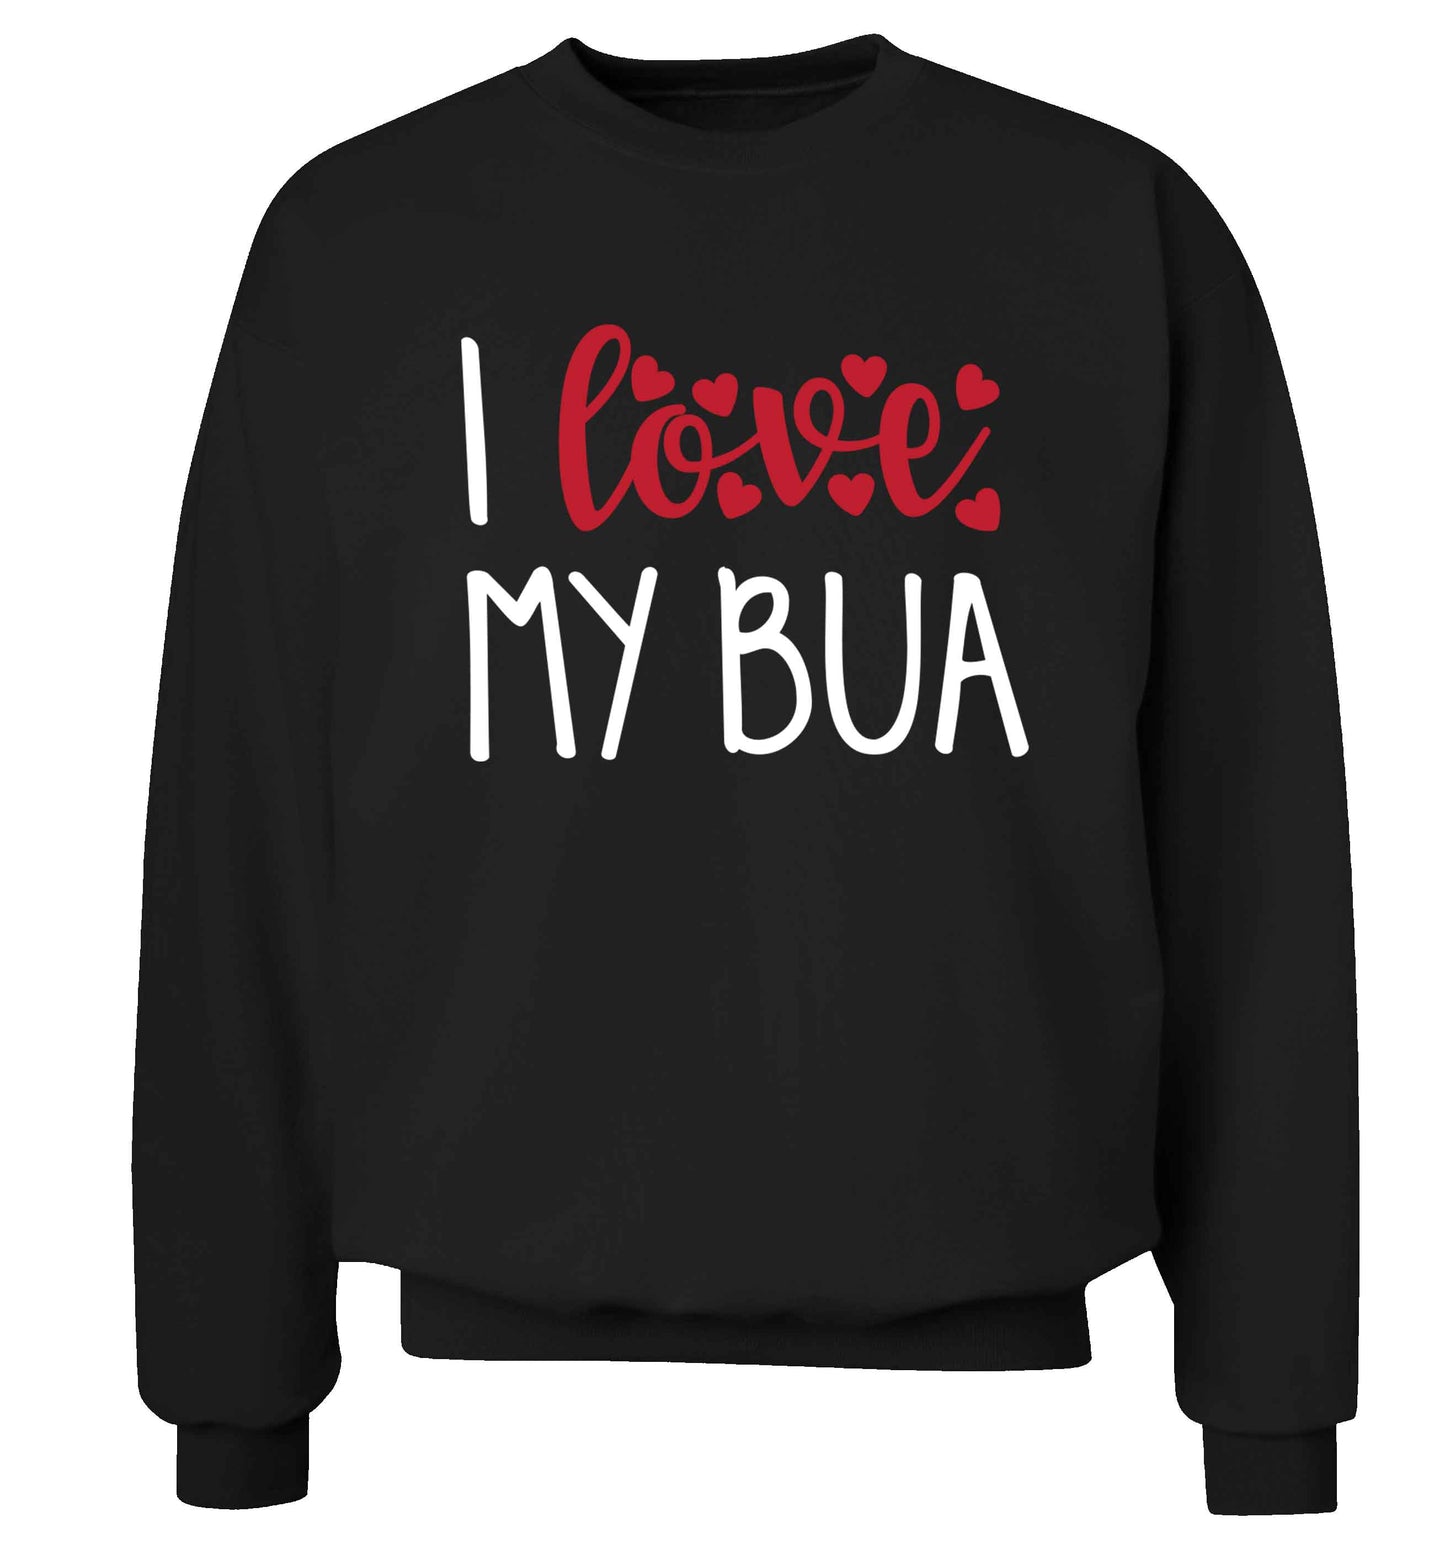 I love my bua Adult's unisex black Sweater 2XL